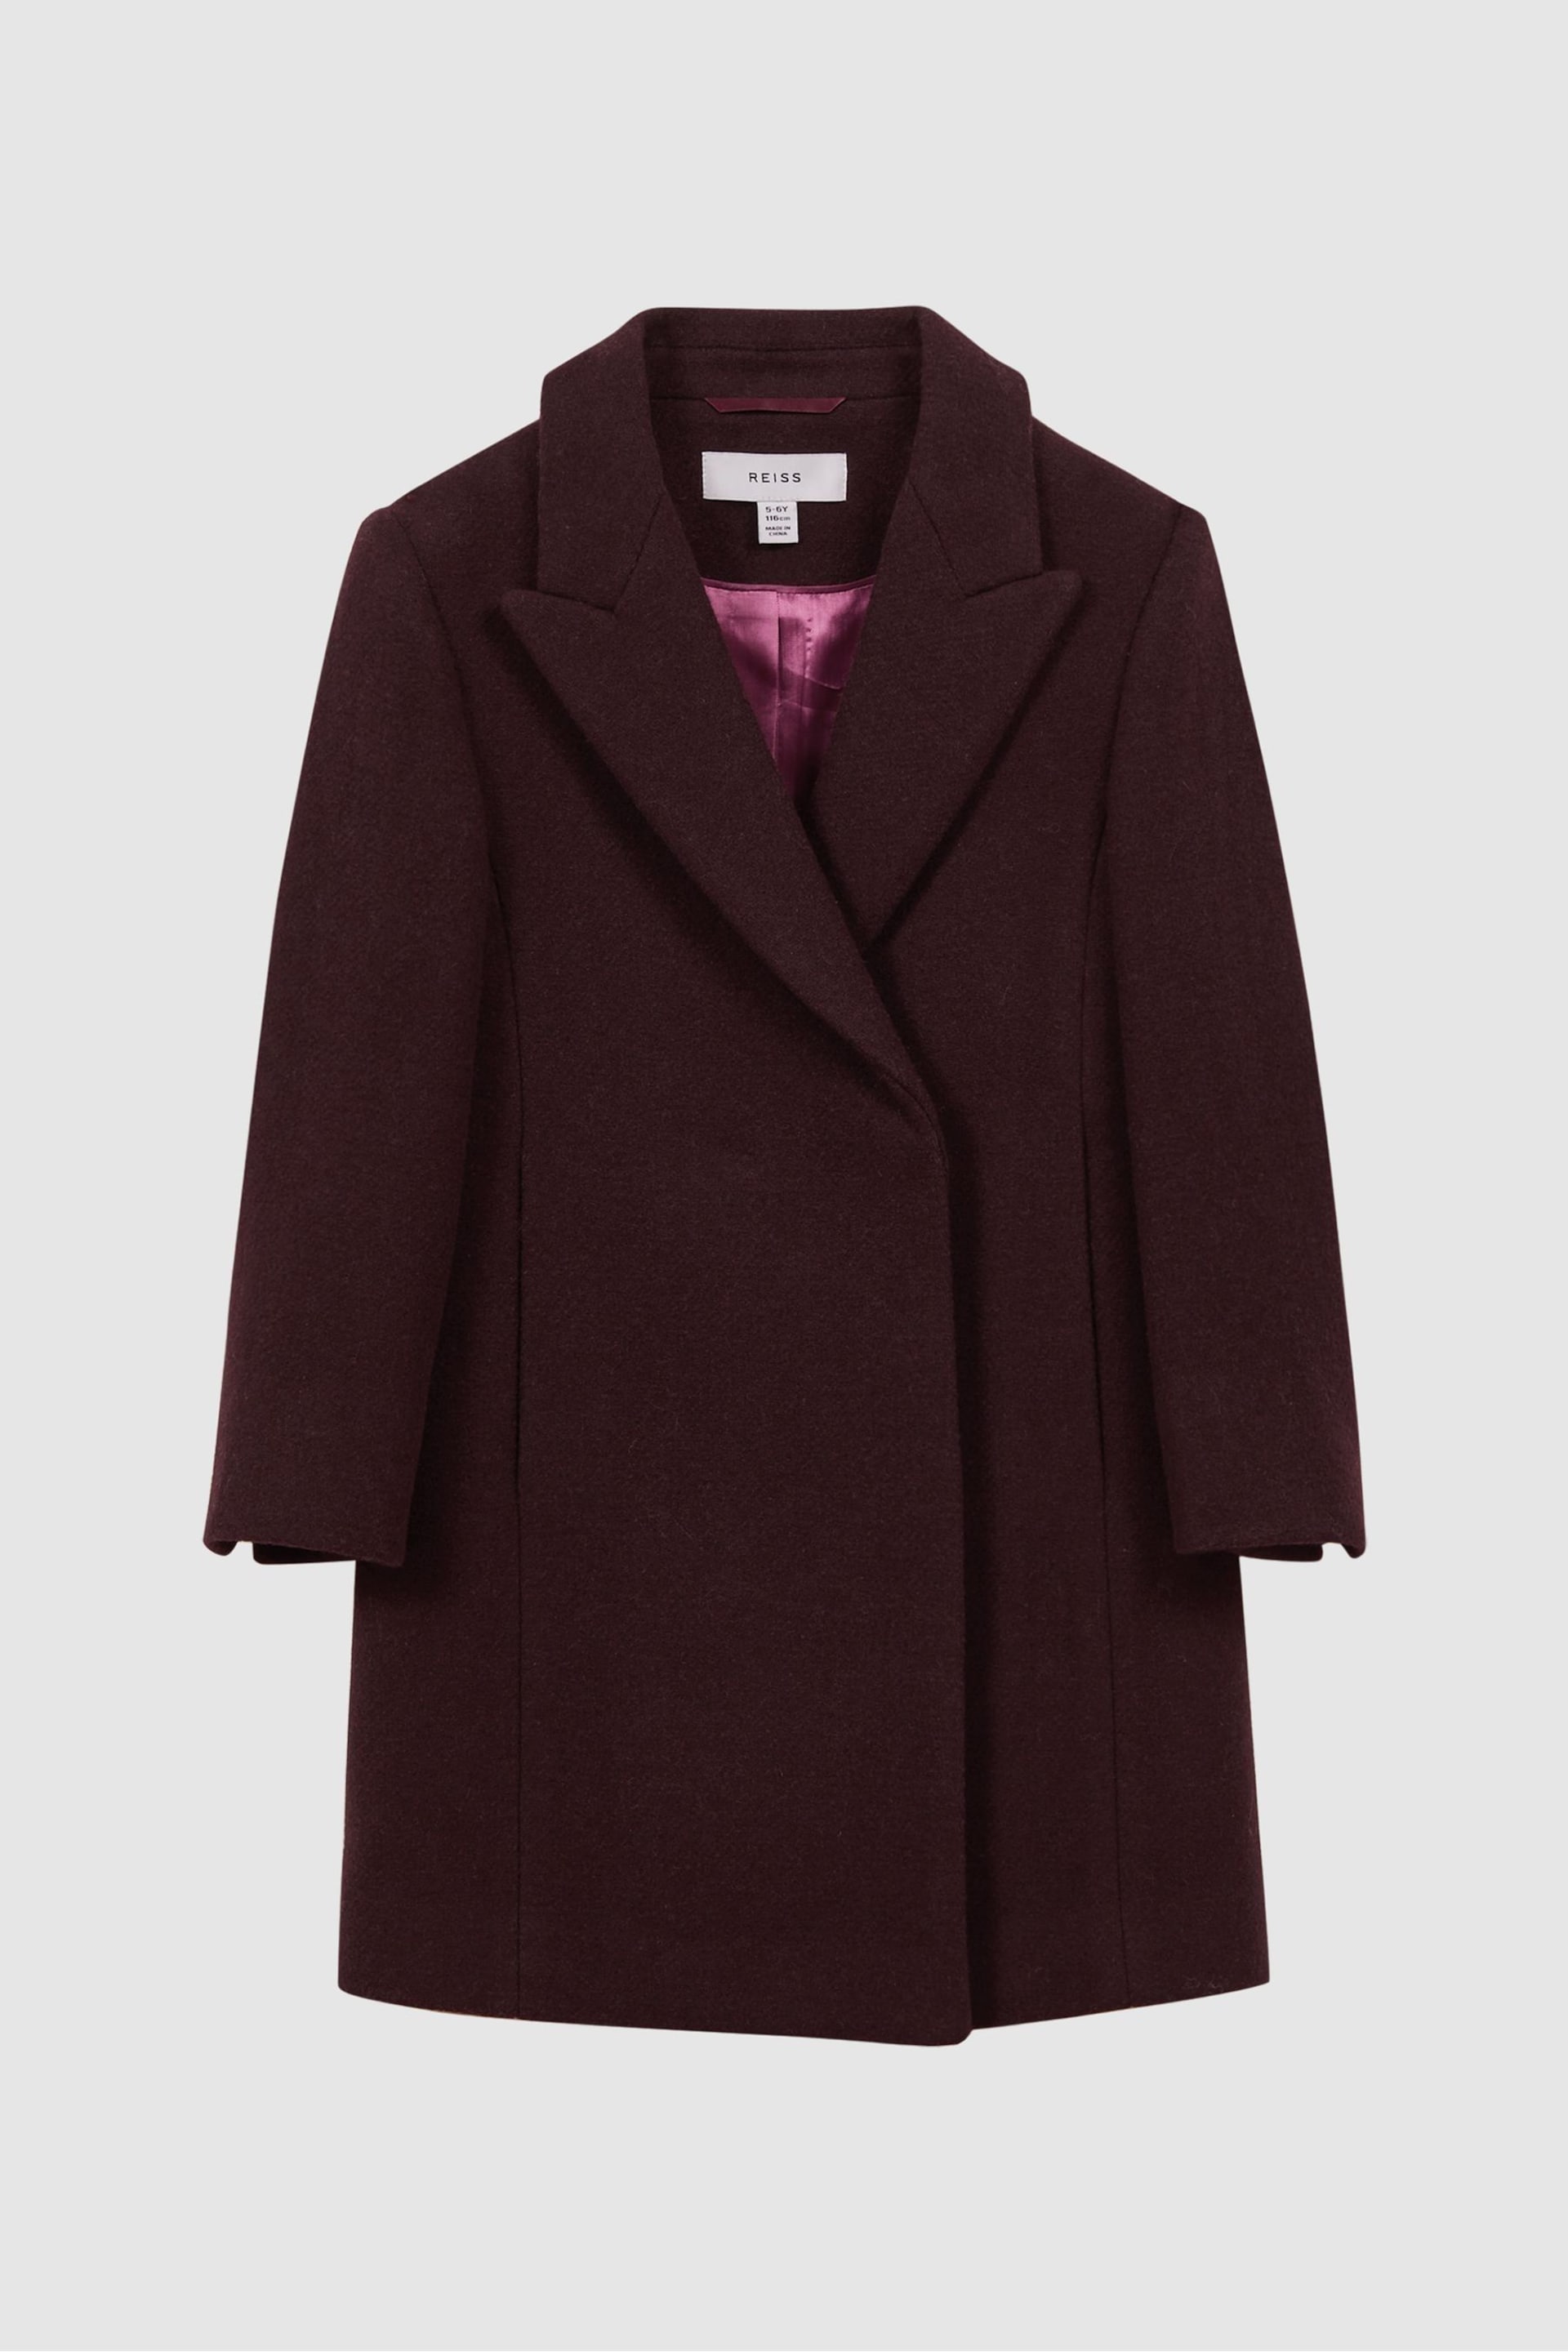 Reiss Berry Harlow Junior Mid Length Wool Blend Coat - Image 2 of 6